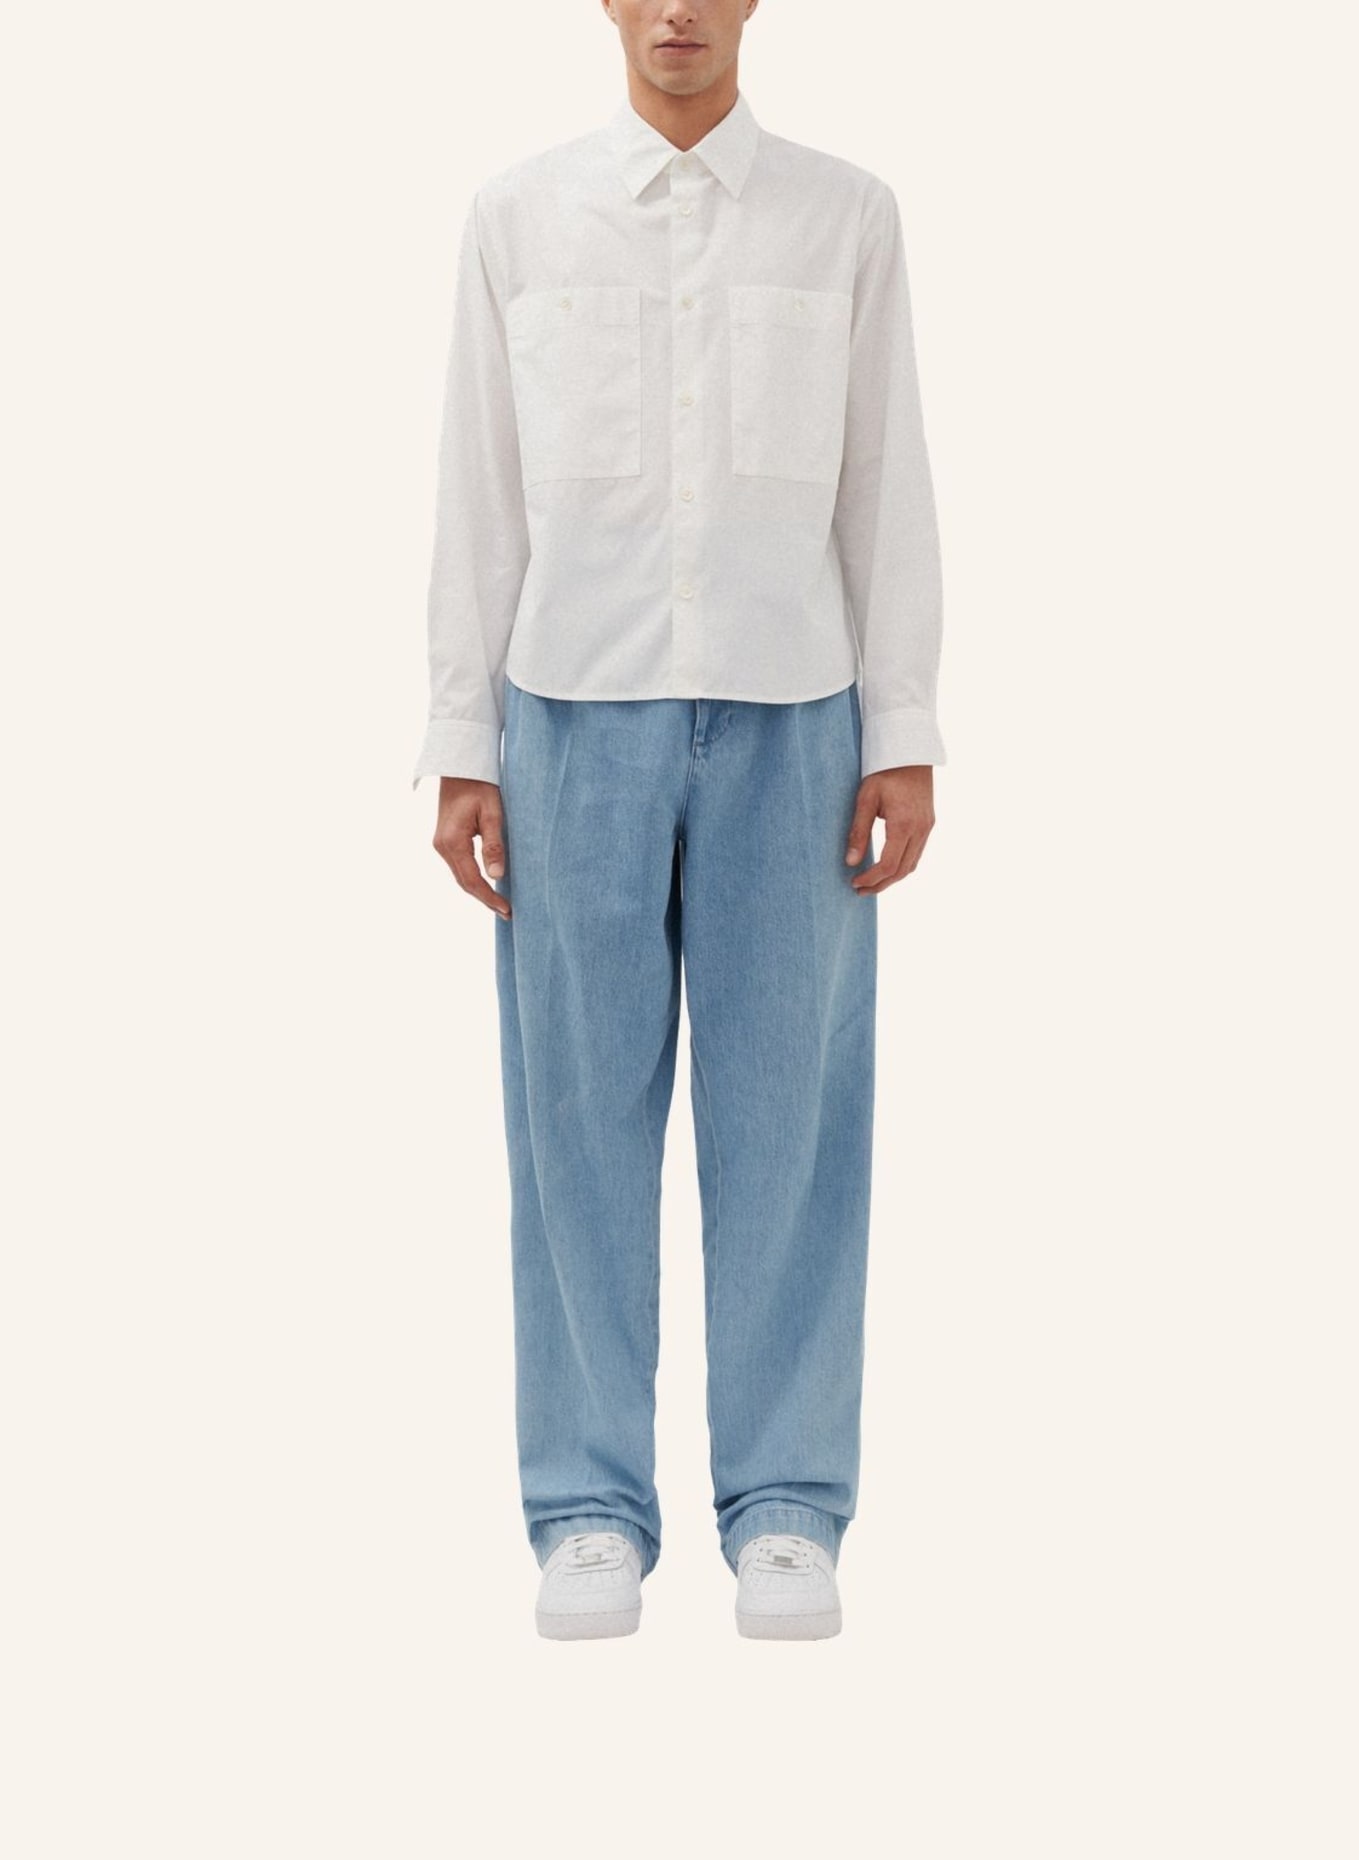 studio seidensticker Hemd, Casual Hemd Regular Fit, Farbe: WEISS (Bild 4)